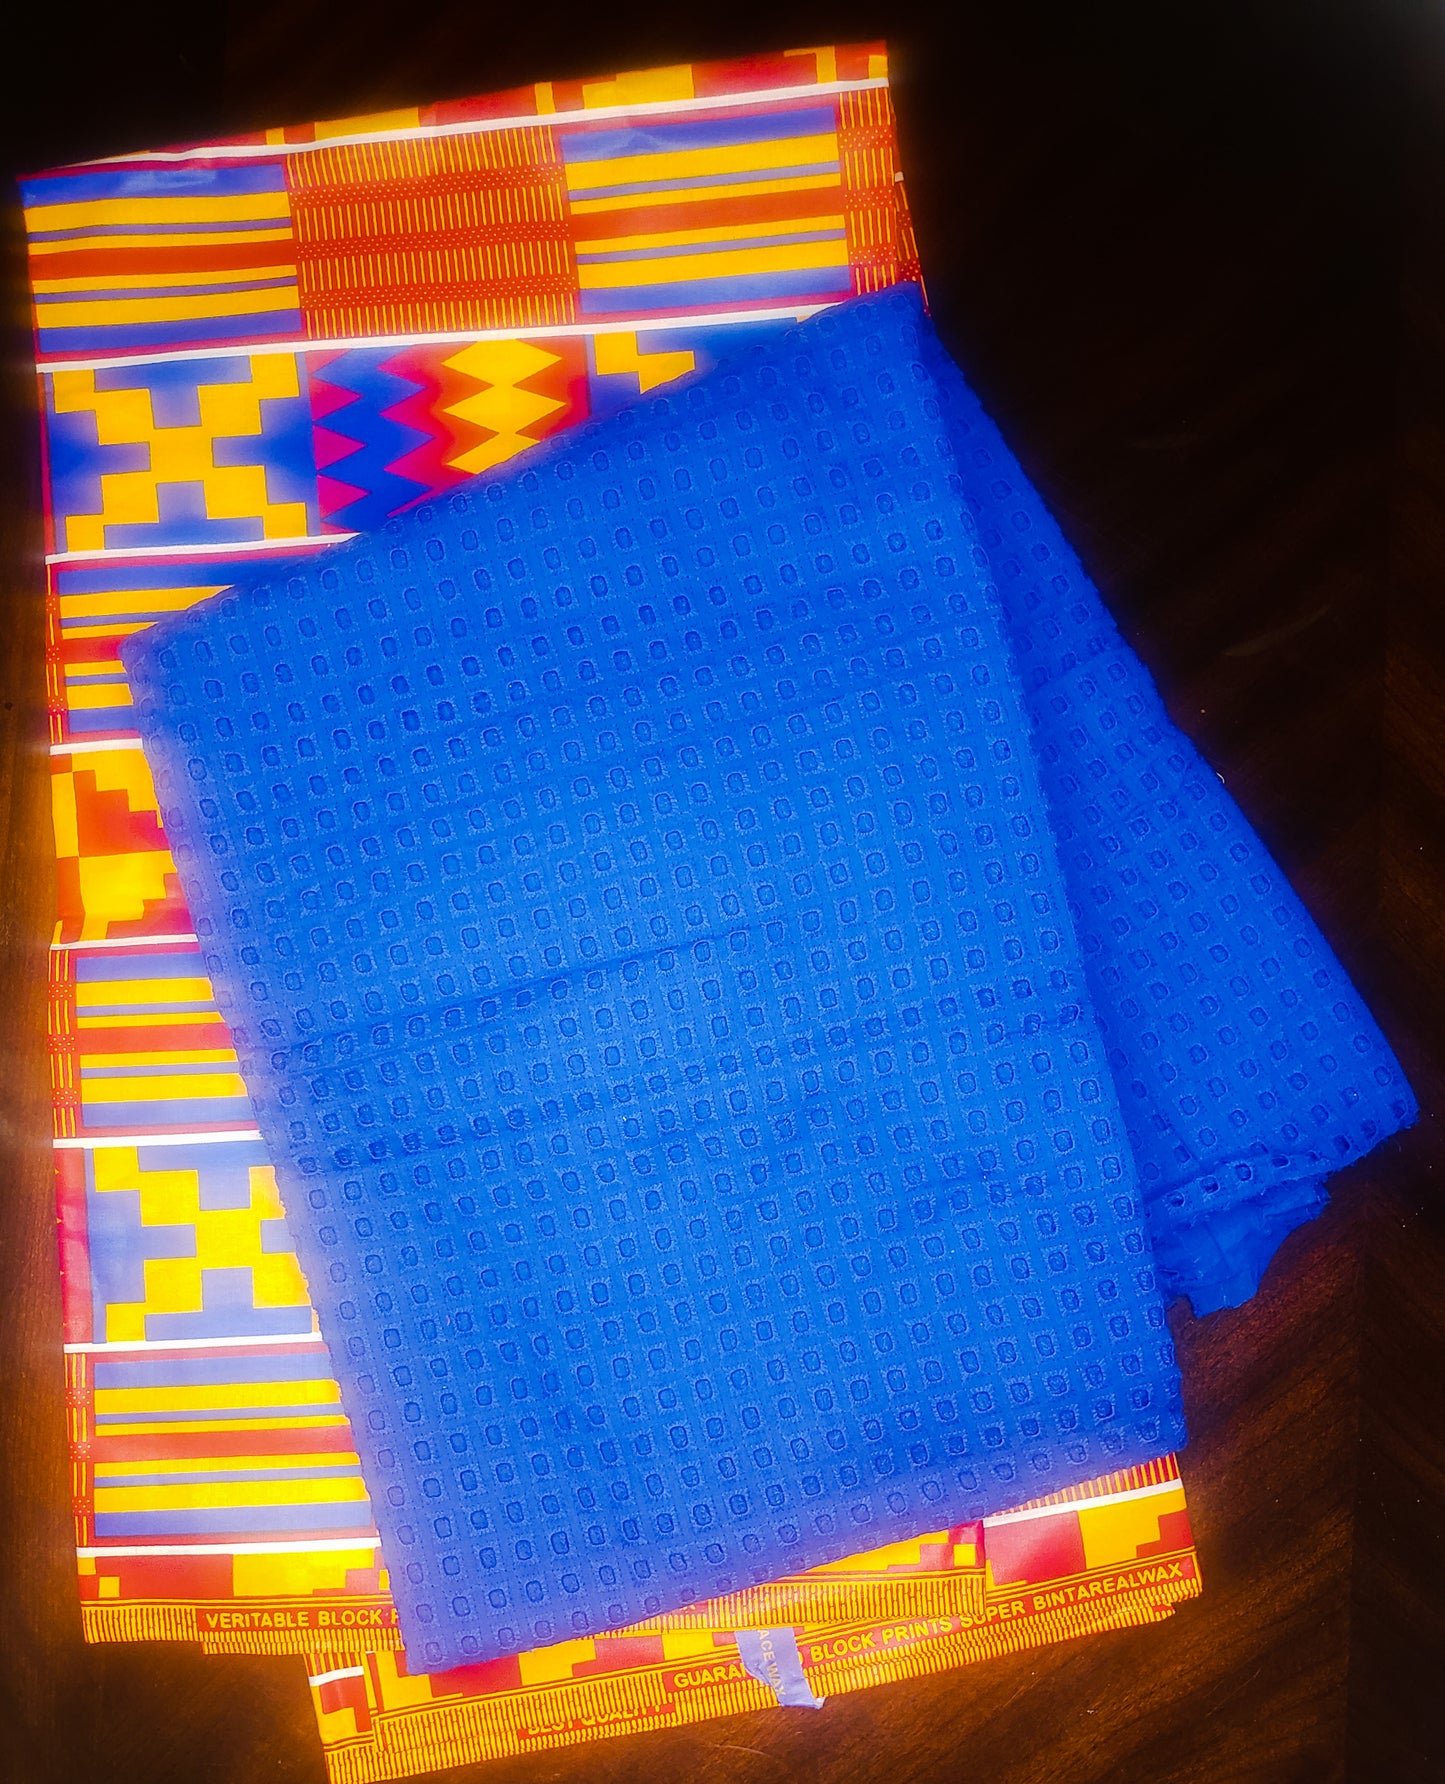 Ankara - lace Fabric for sewing - 3 yard Ankara, 2 yard lace